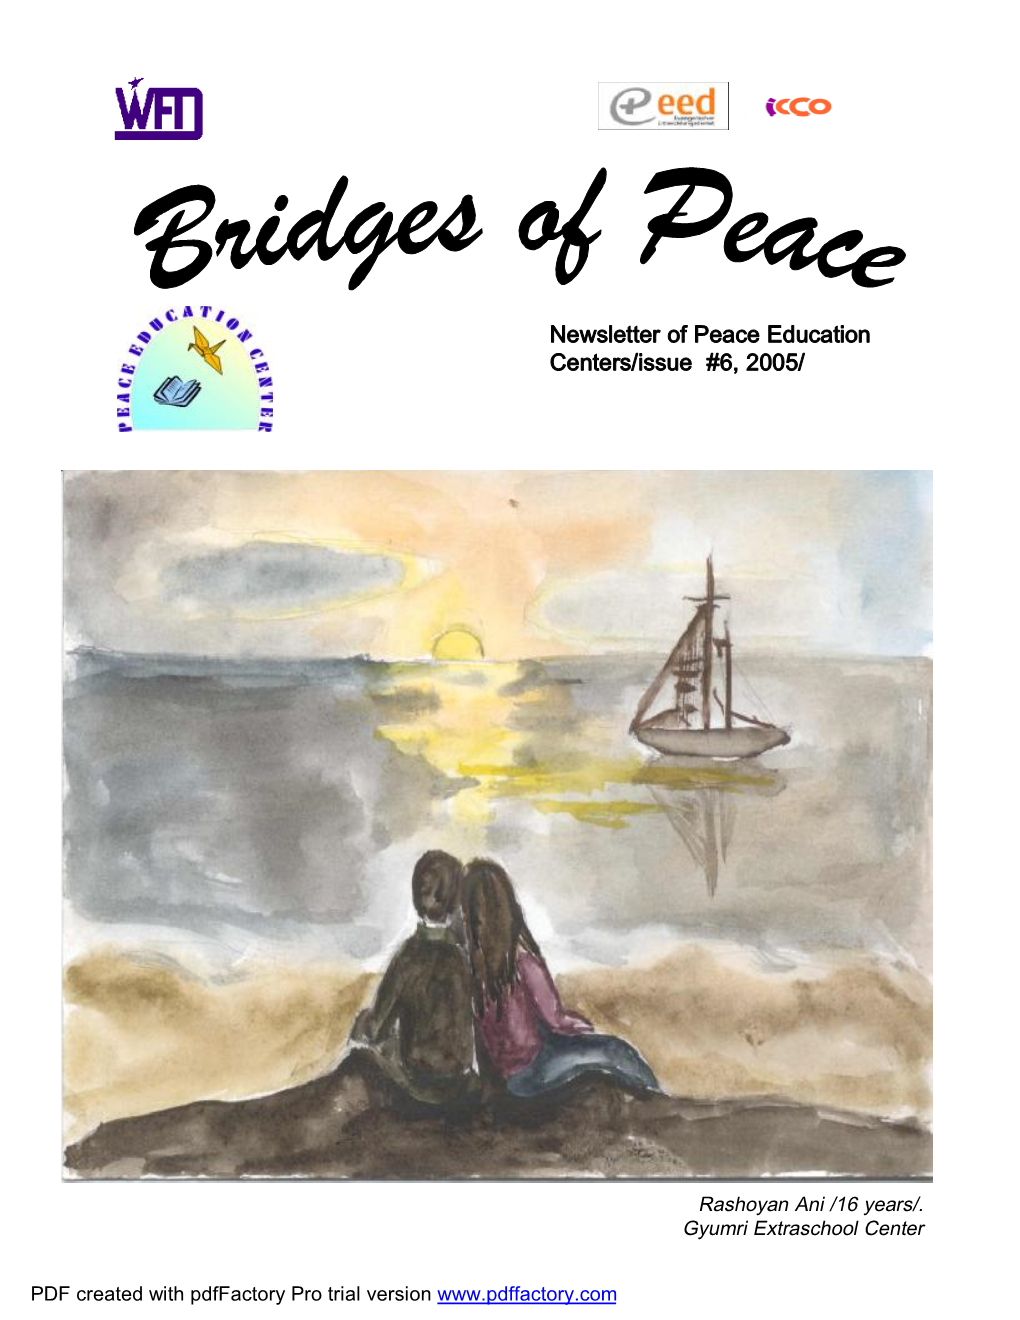 Peace Bridges” Newsletter